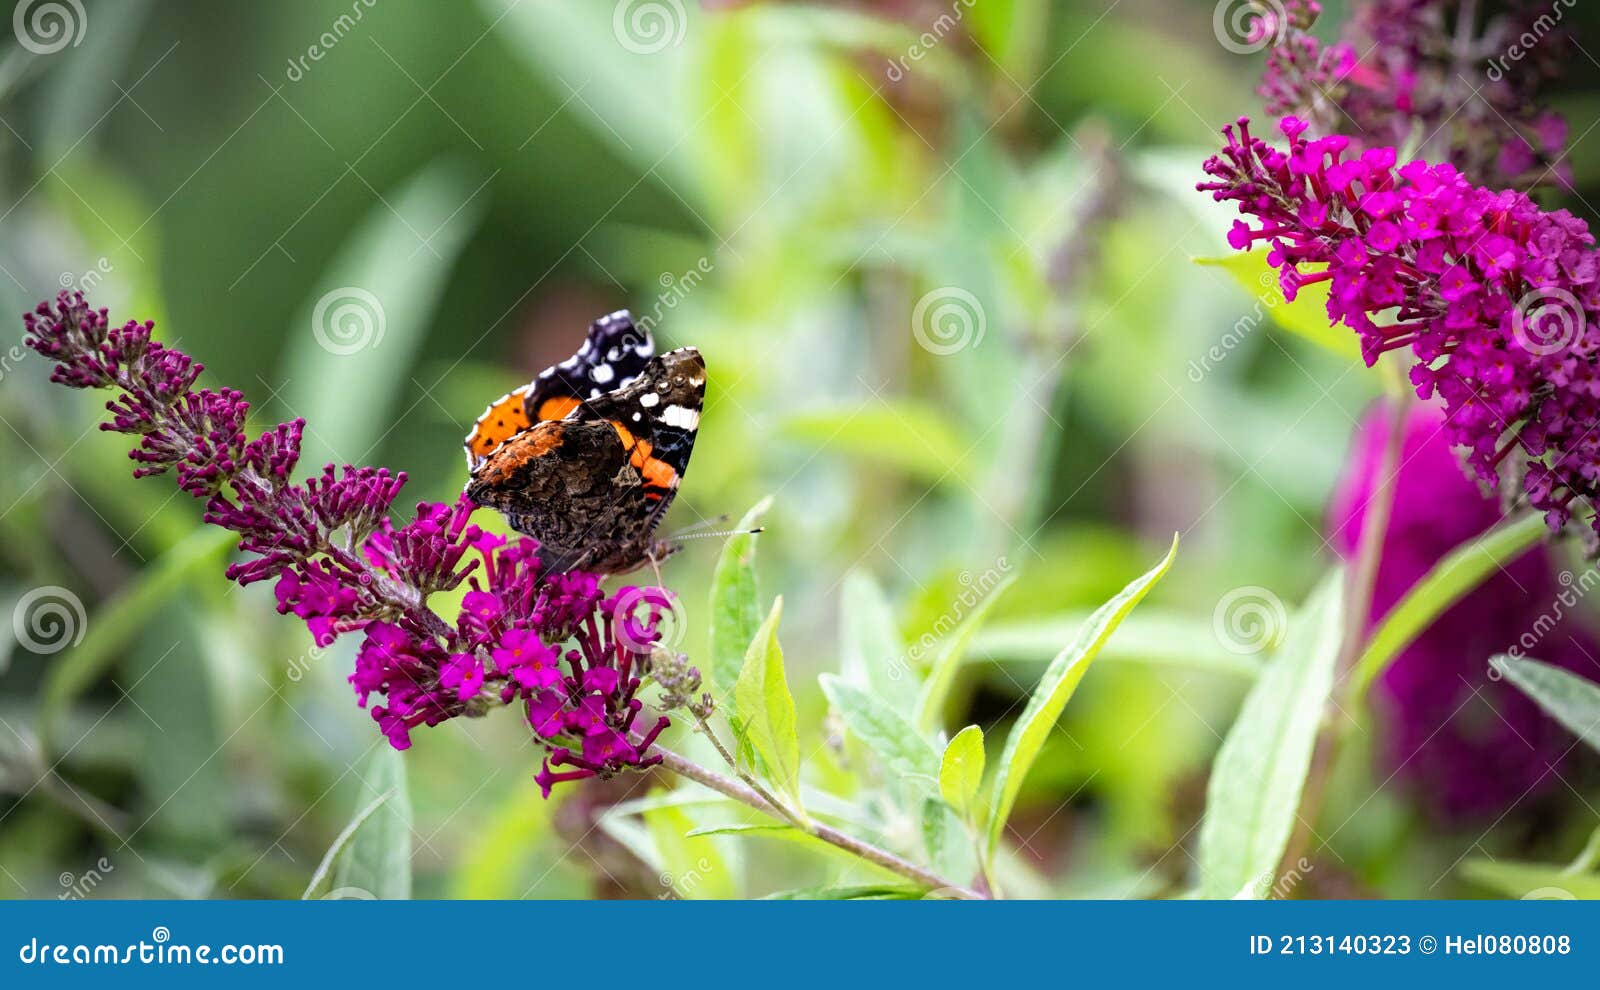 red admiral butterfly - vanessa cardui, sitting on flowering pink butterflybush - buddleja davidii - in summer garden.